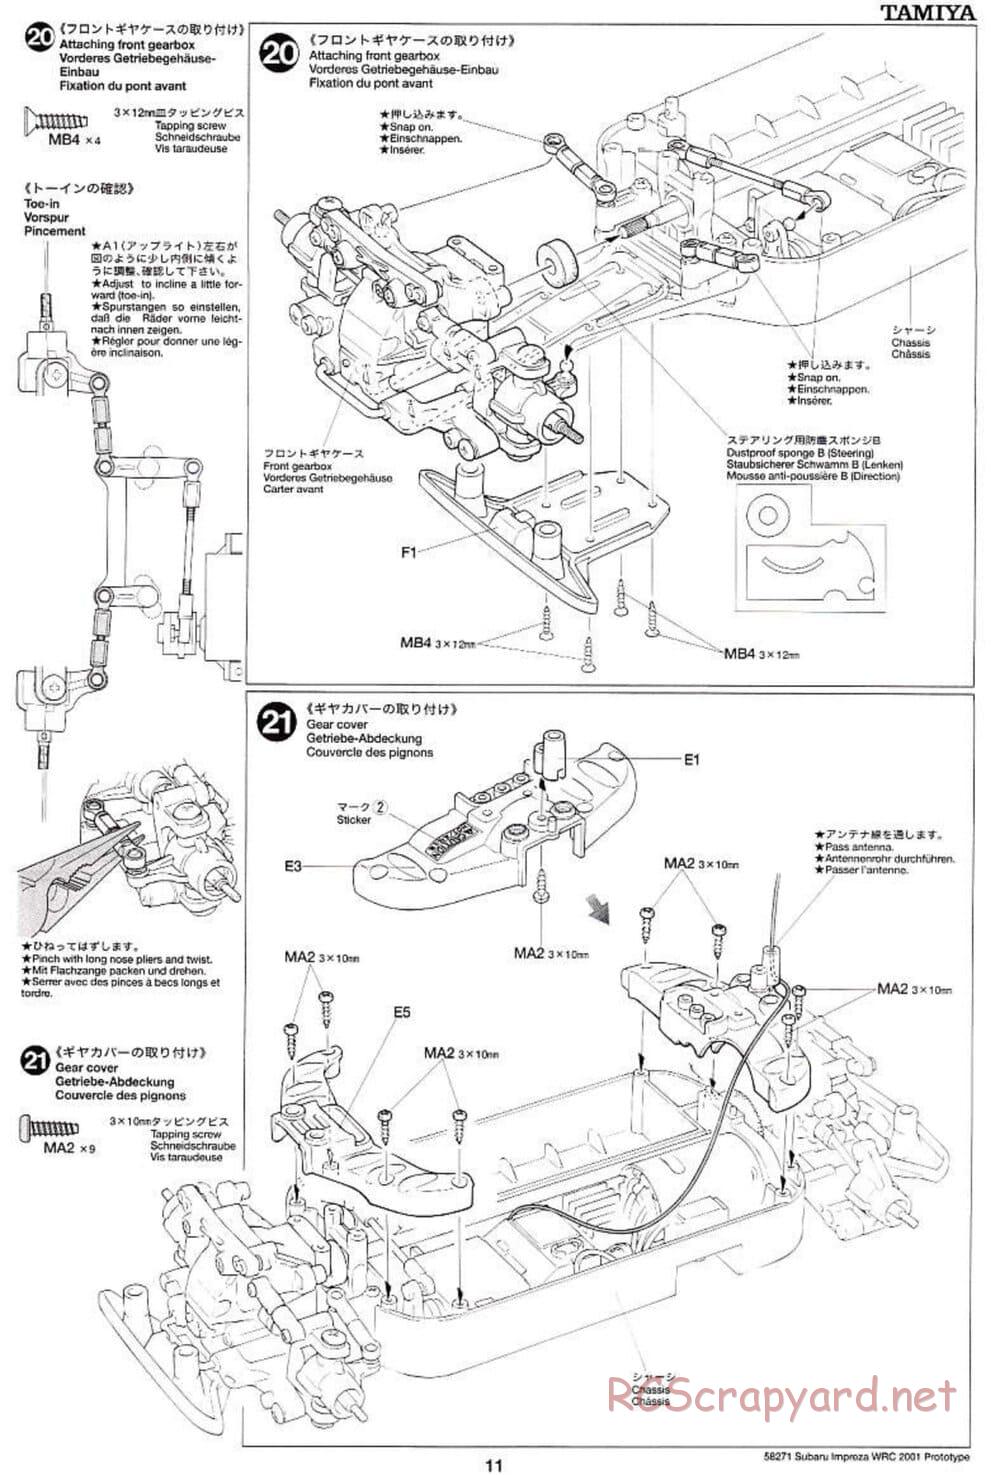 Tamiya - Subaru Impreza WRC 2001 Prototype - TB-01 Chassis - Manual - Page 11